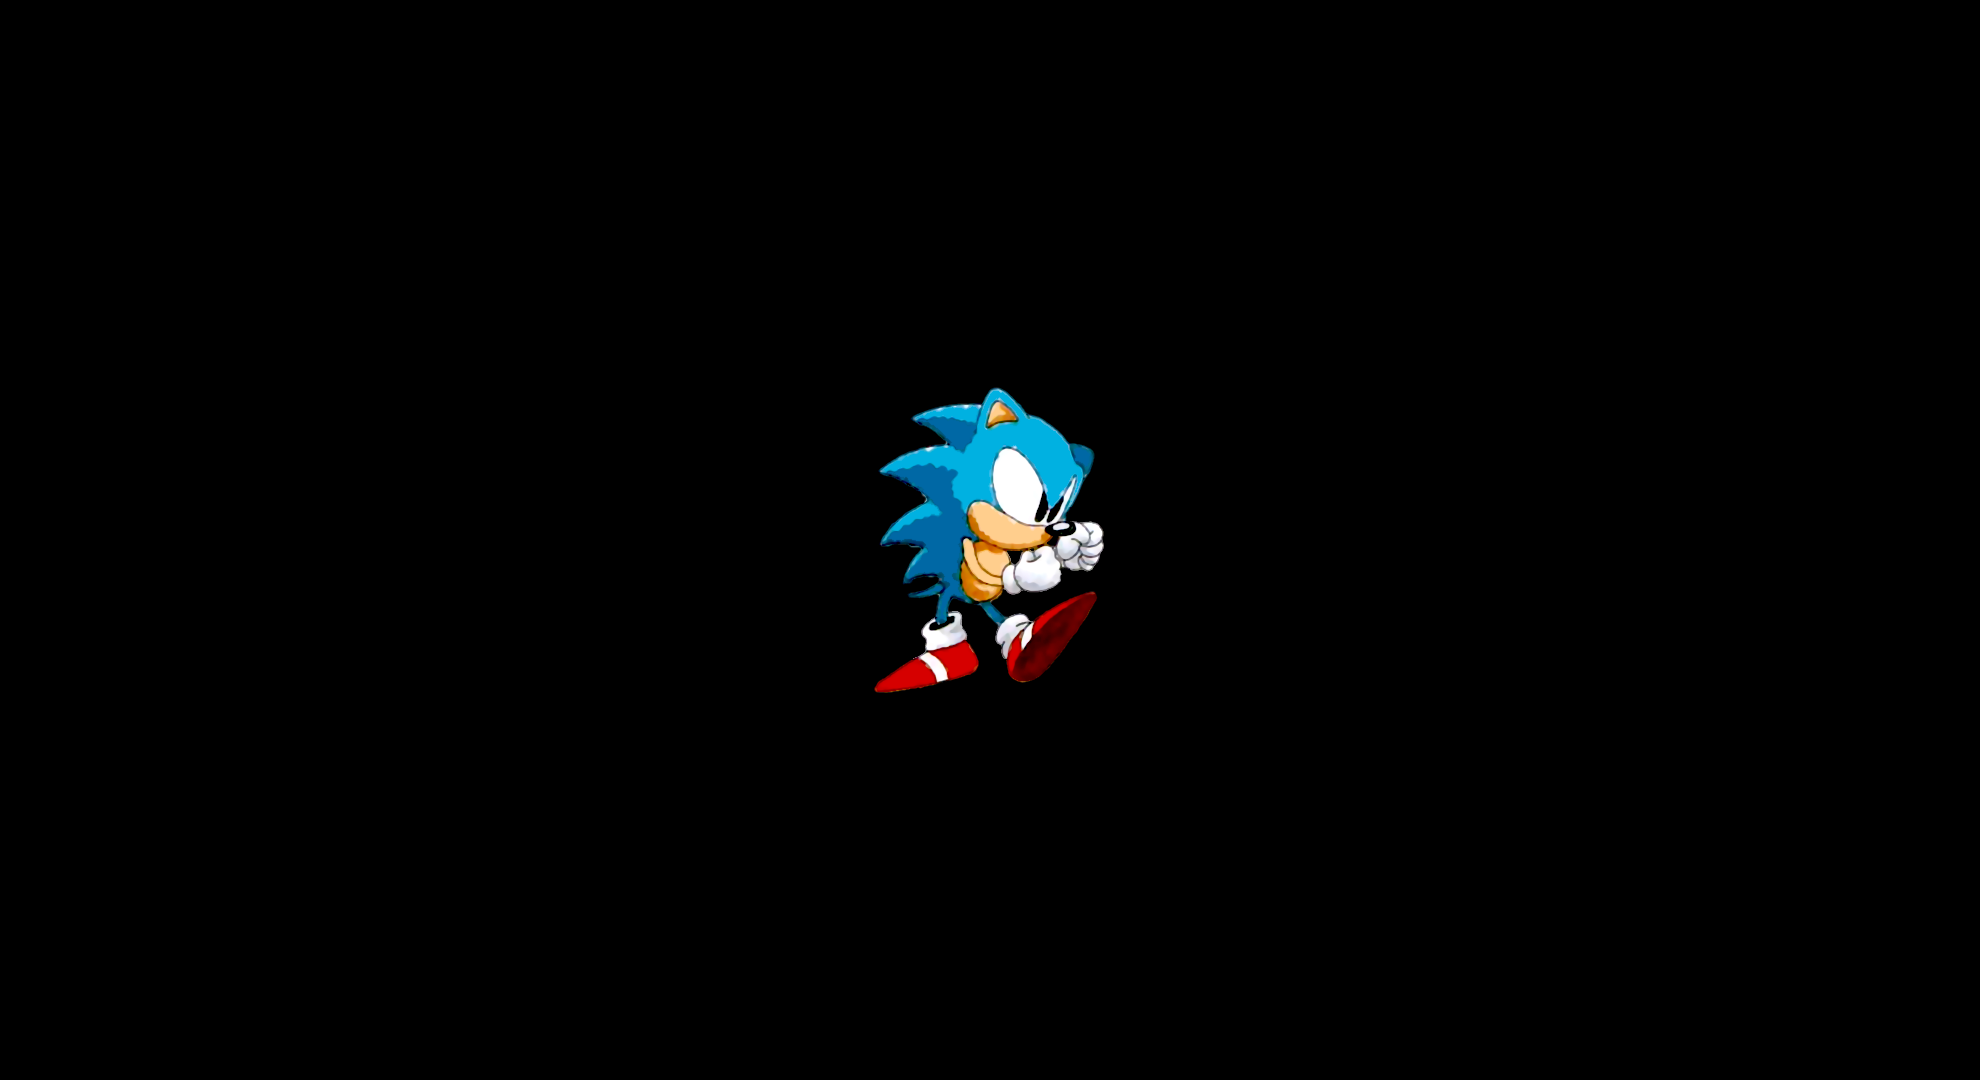 Video Game Sonic the Hedgehog (1991) HD Wallpaper